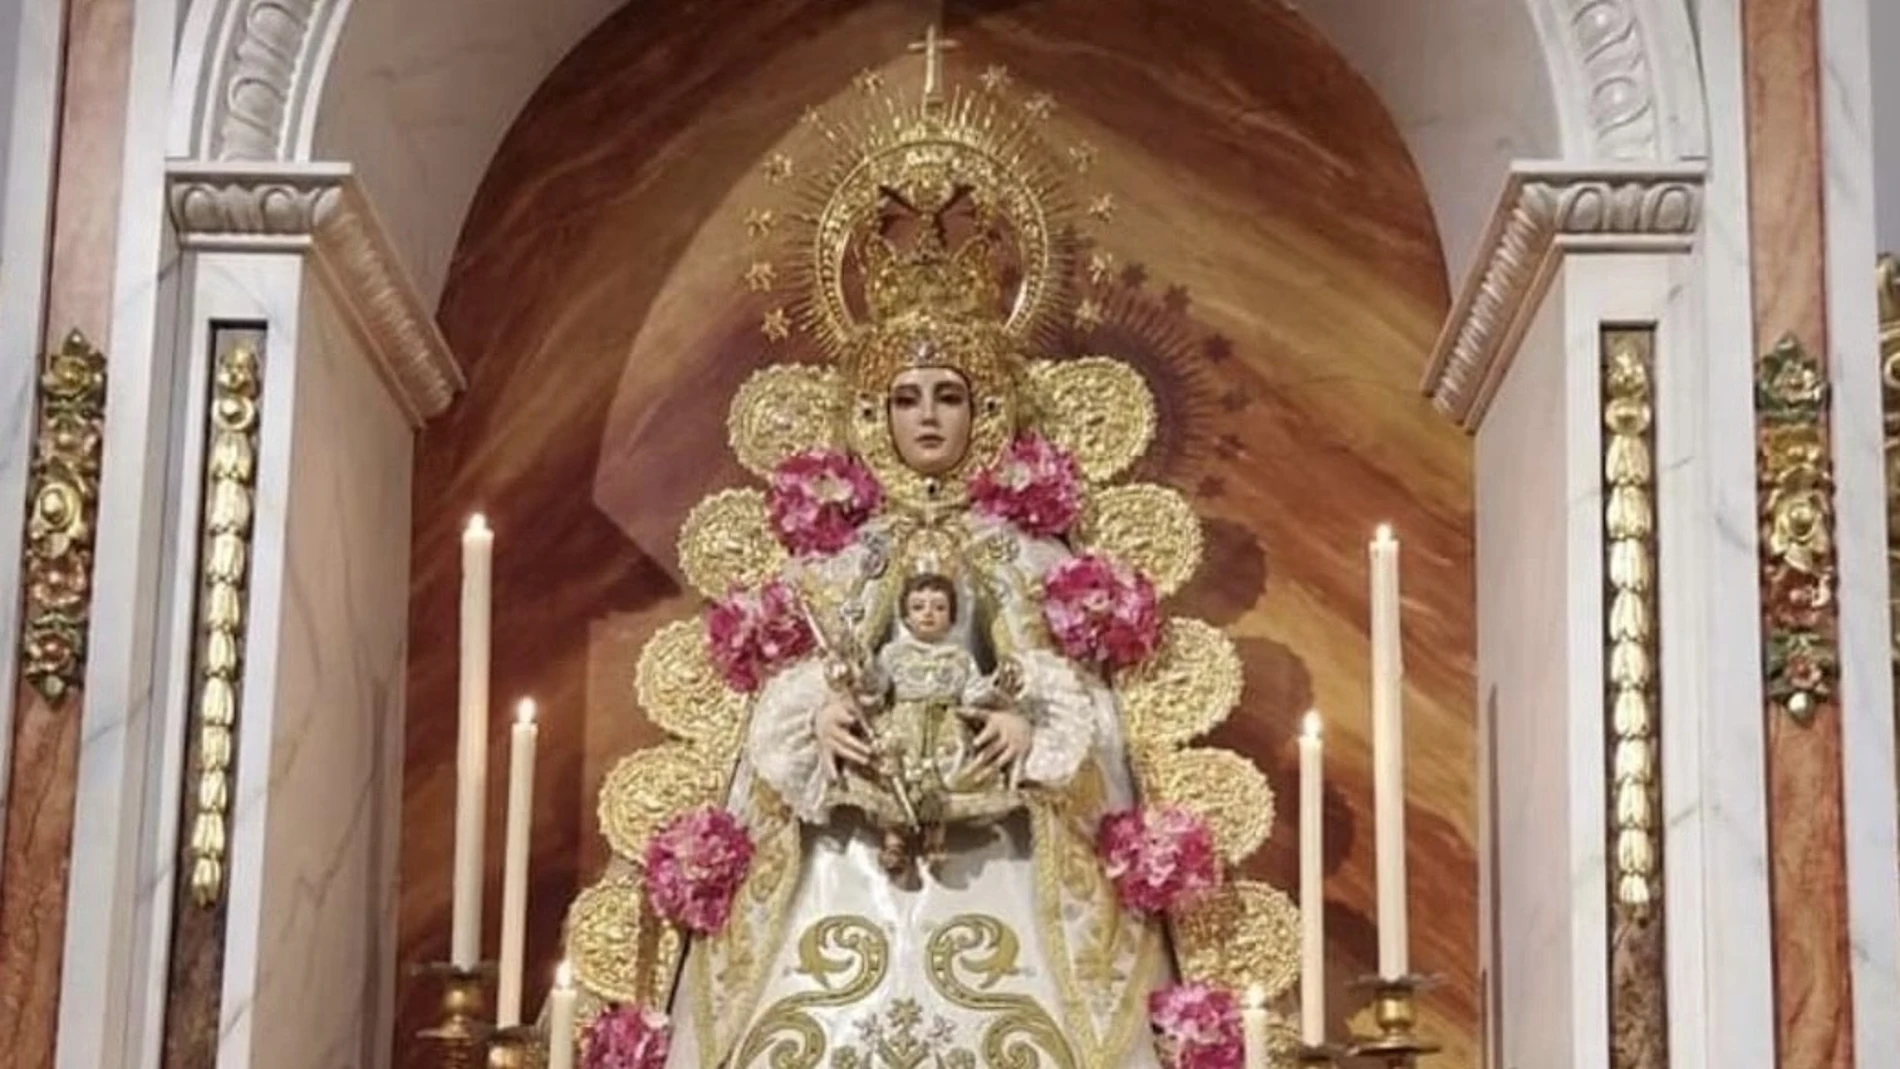 Virgen del Rocío, que se venera en la parroquia de San José de Cádiz